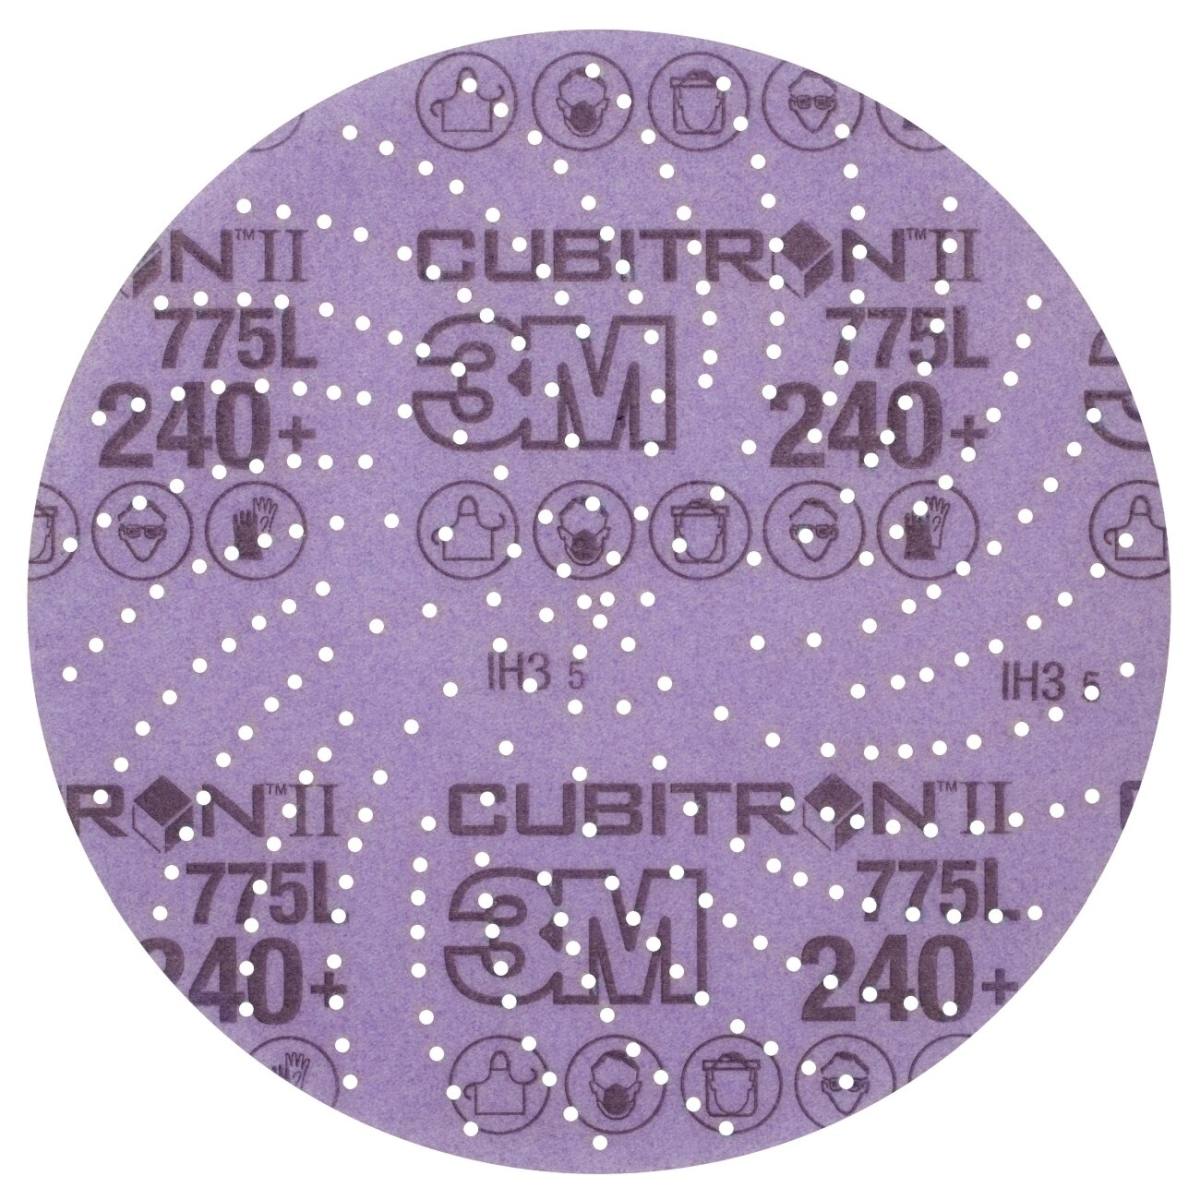 3M Cubitron II Hookit film disk 775L, 150 mm, 240 , multihole #47098